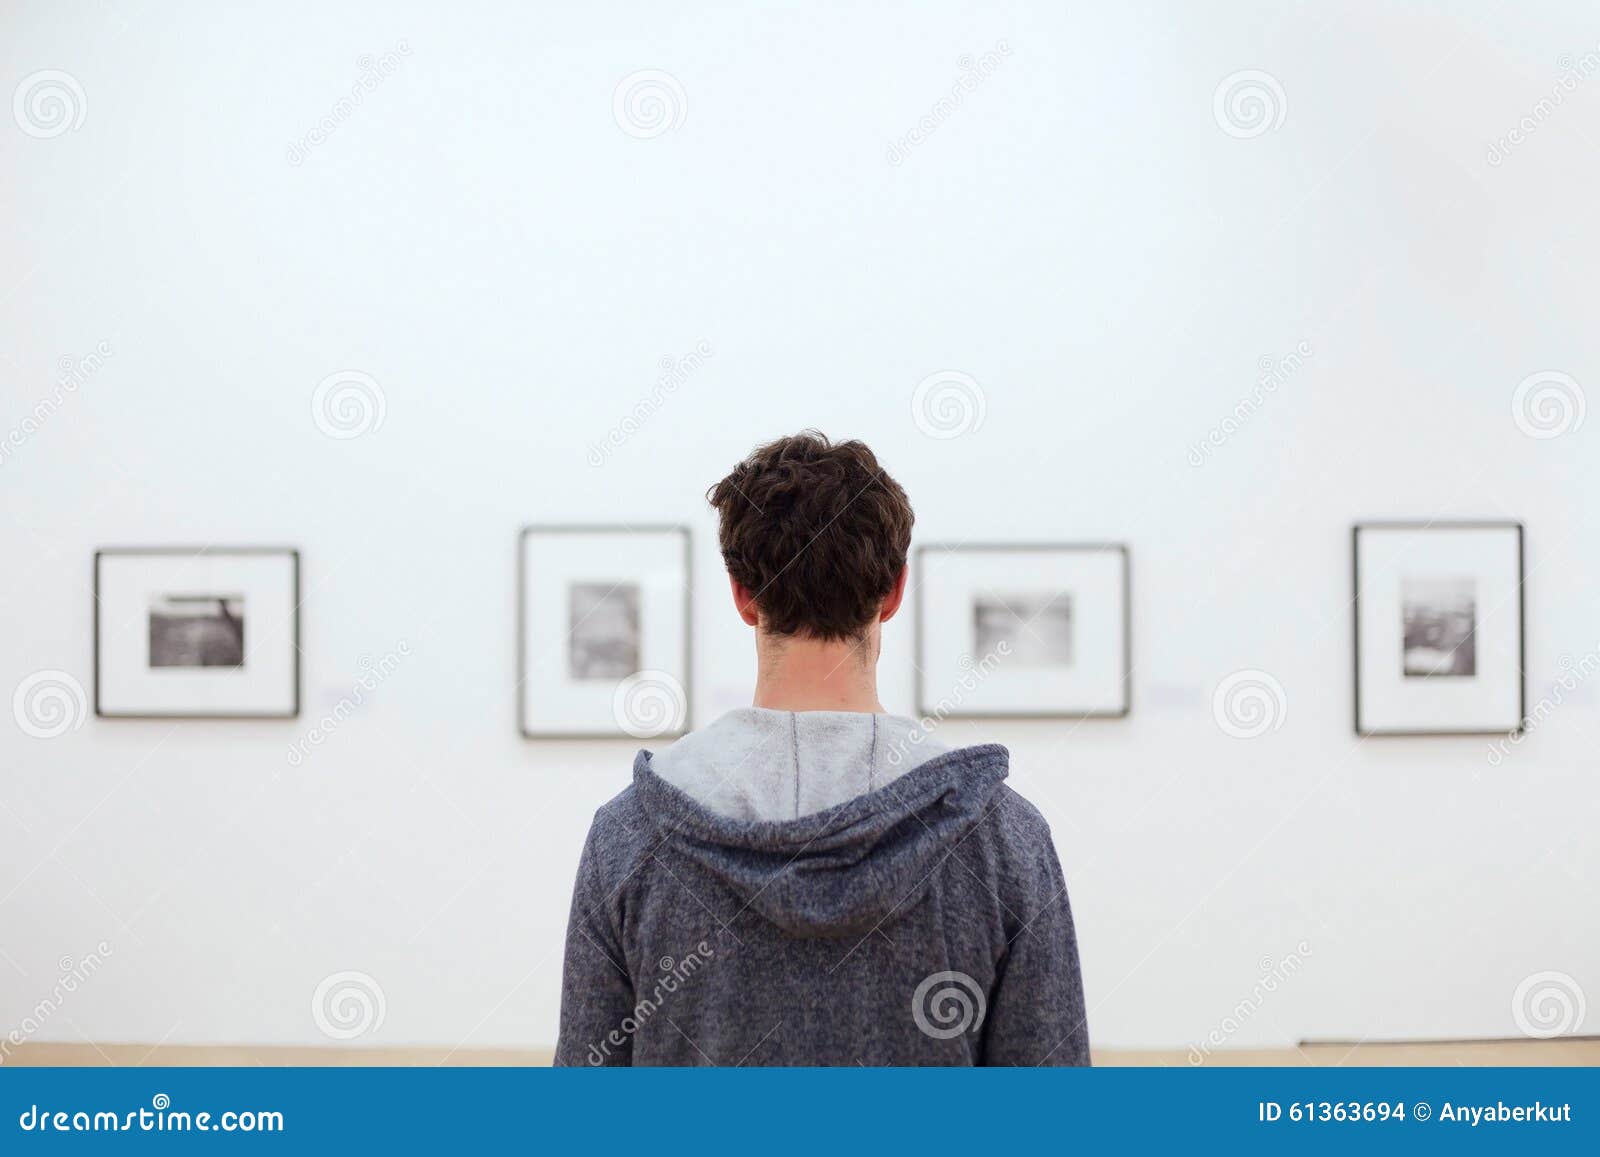 people in art museum